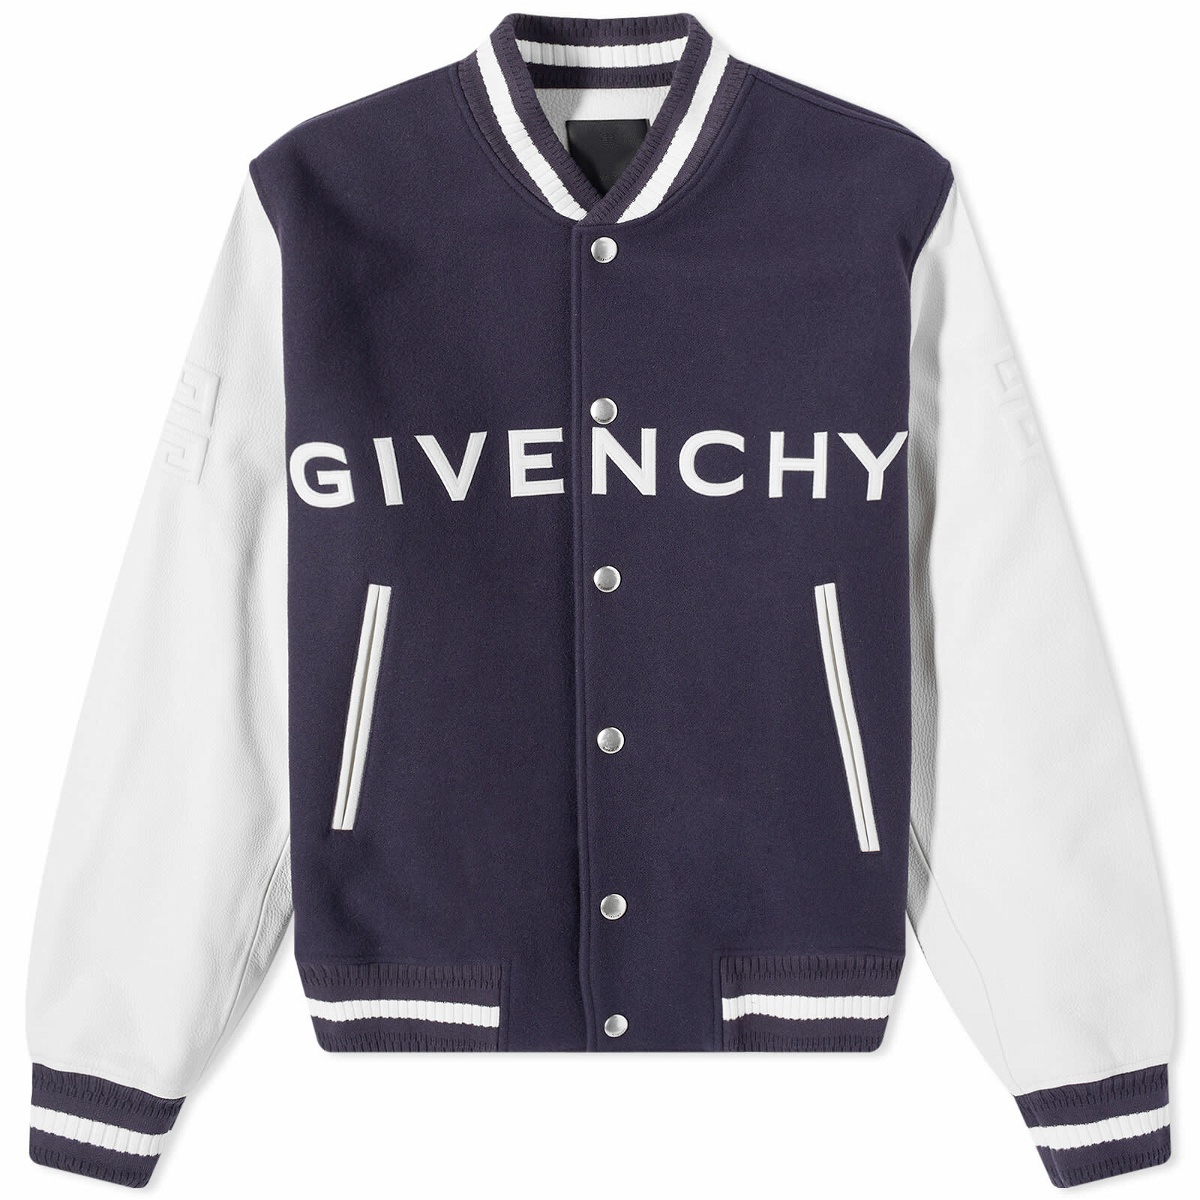 Givenchy Men's Logo Leather Varsity Jacket in Navy/White Givenchy